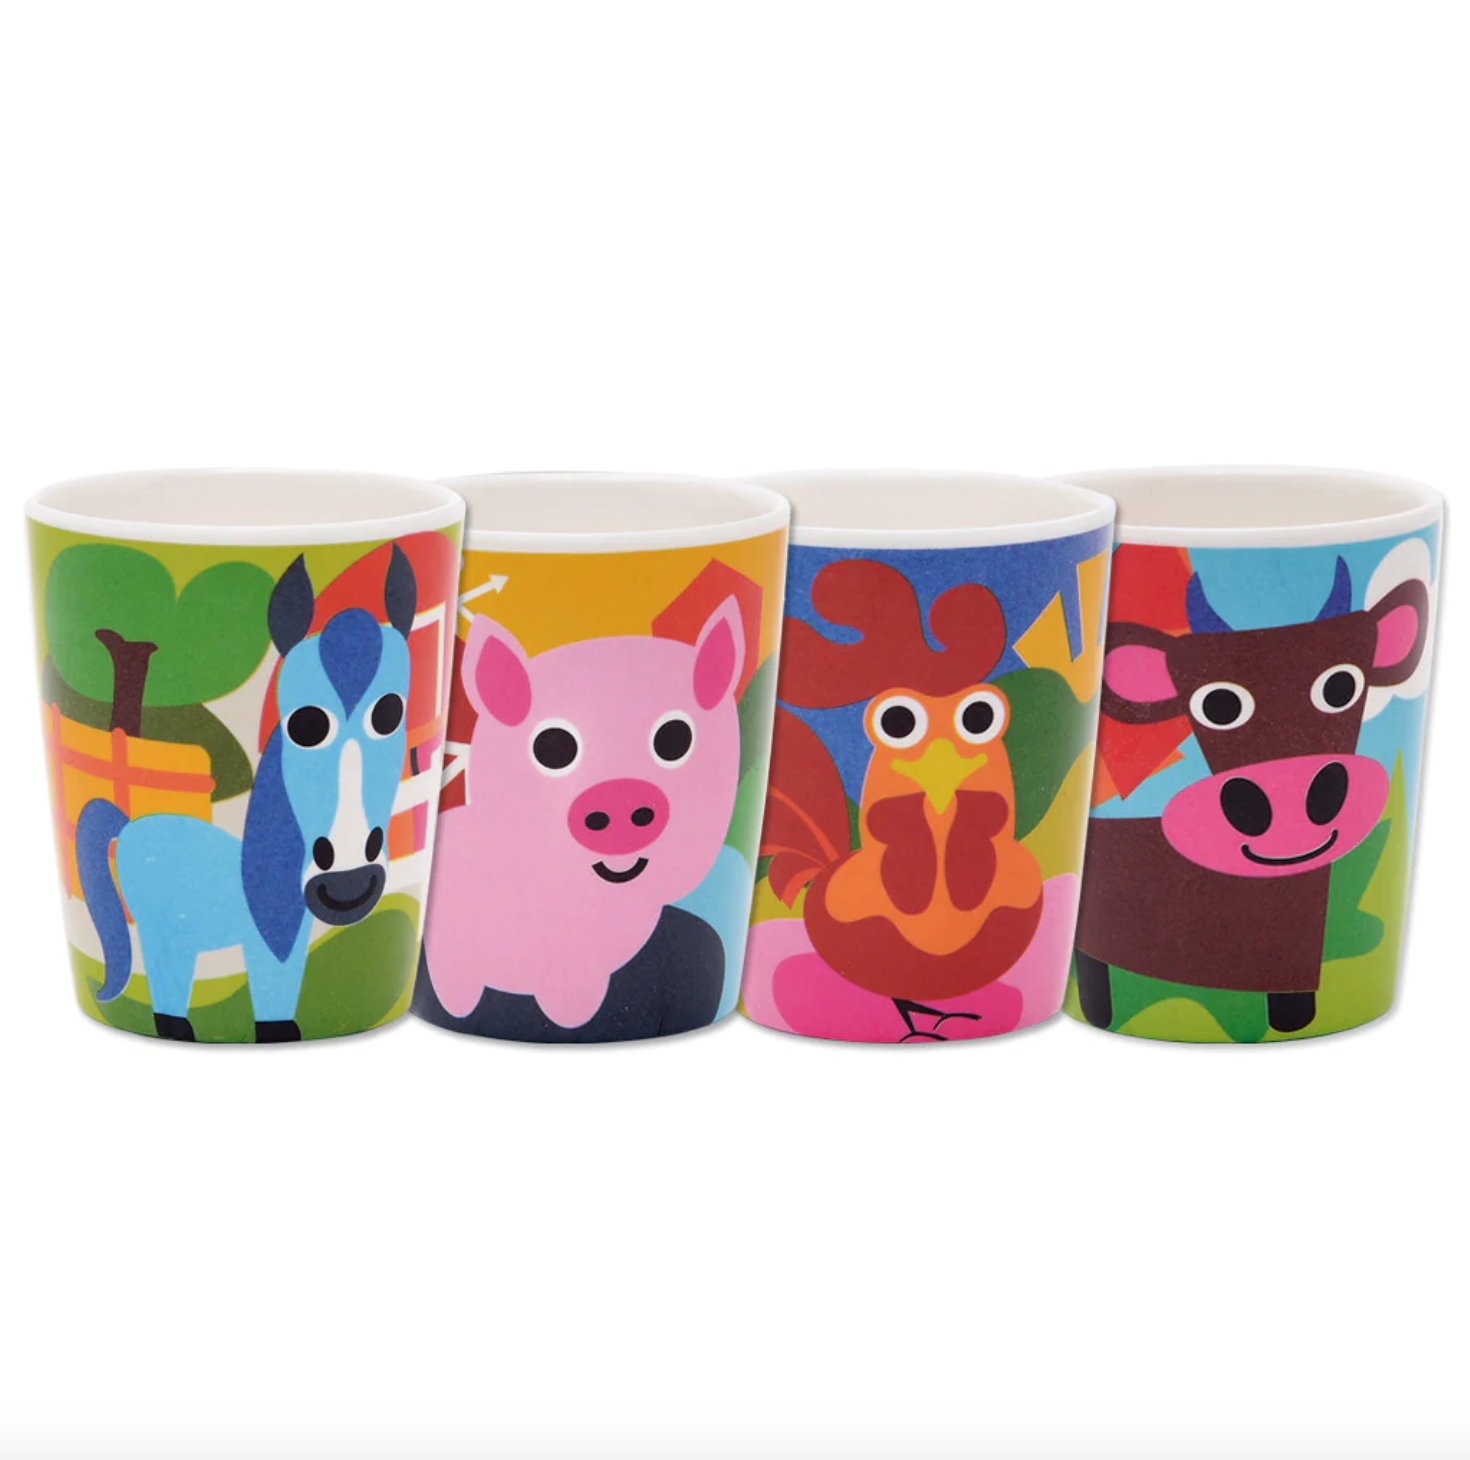 French Bull Kids Everyday Melamine 4 Piece Cup Set – Farm Animals